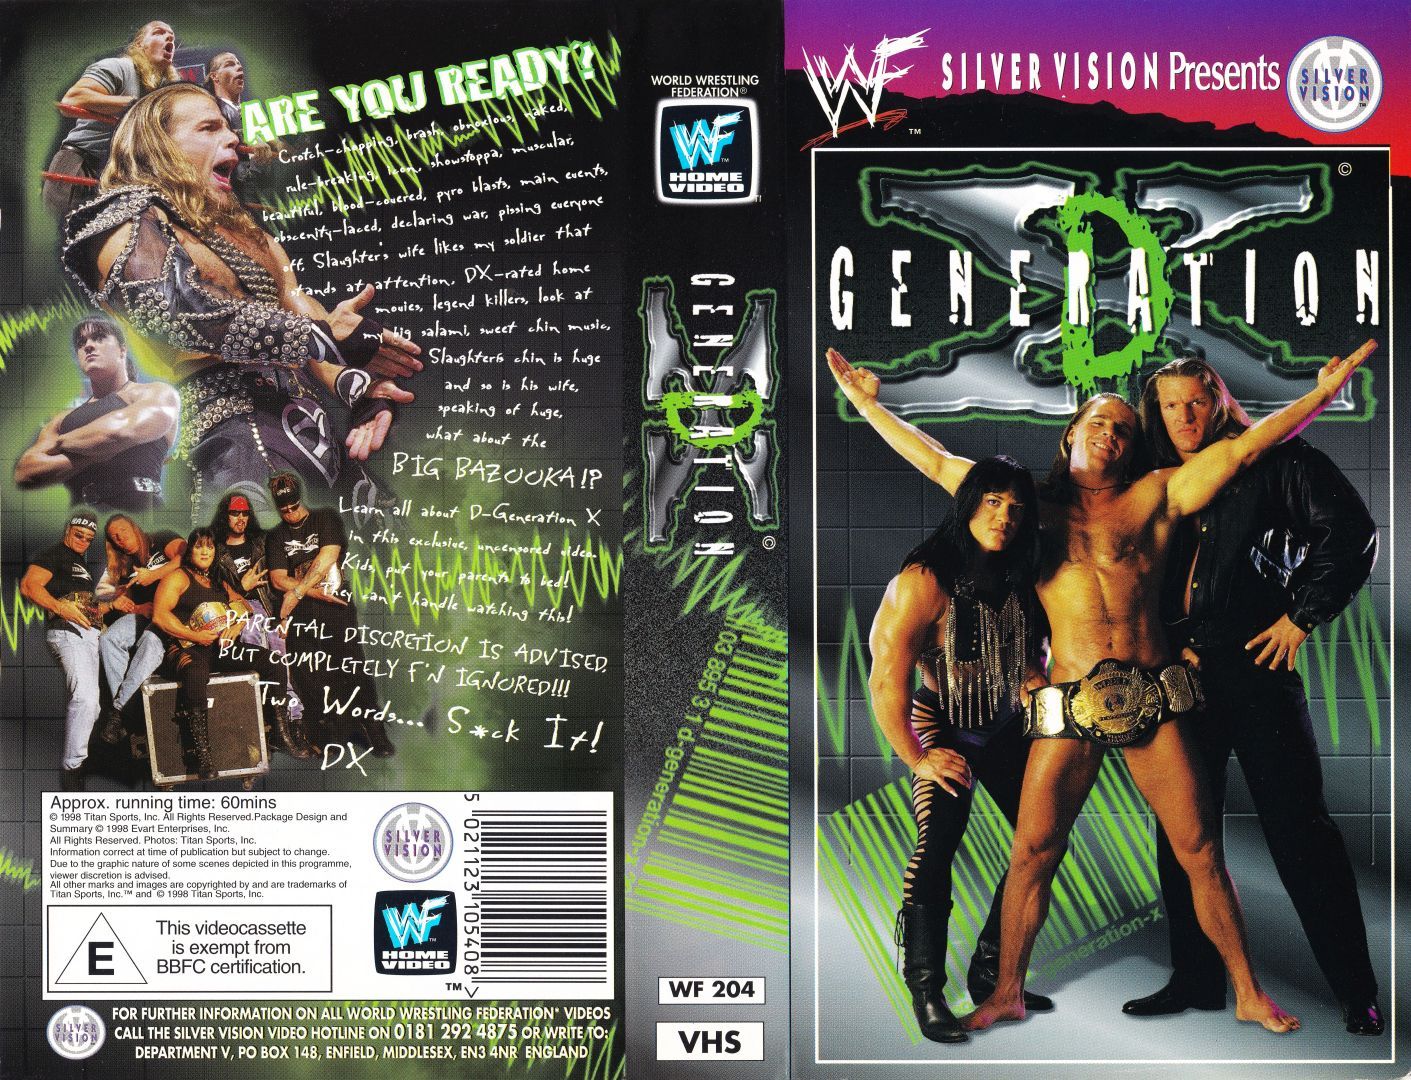 WWF Wrestling on X pic